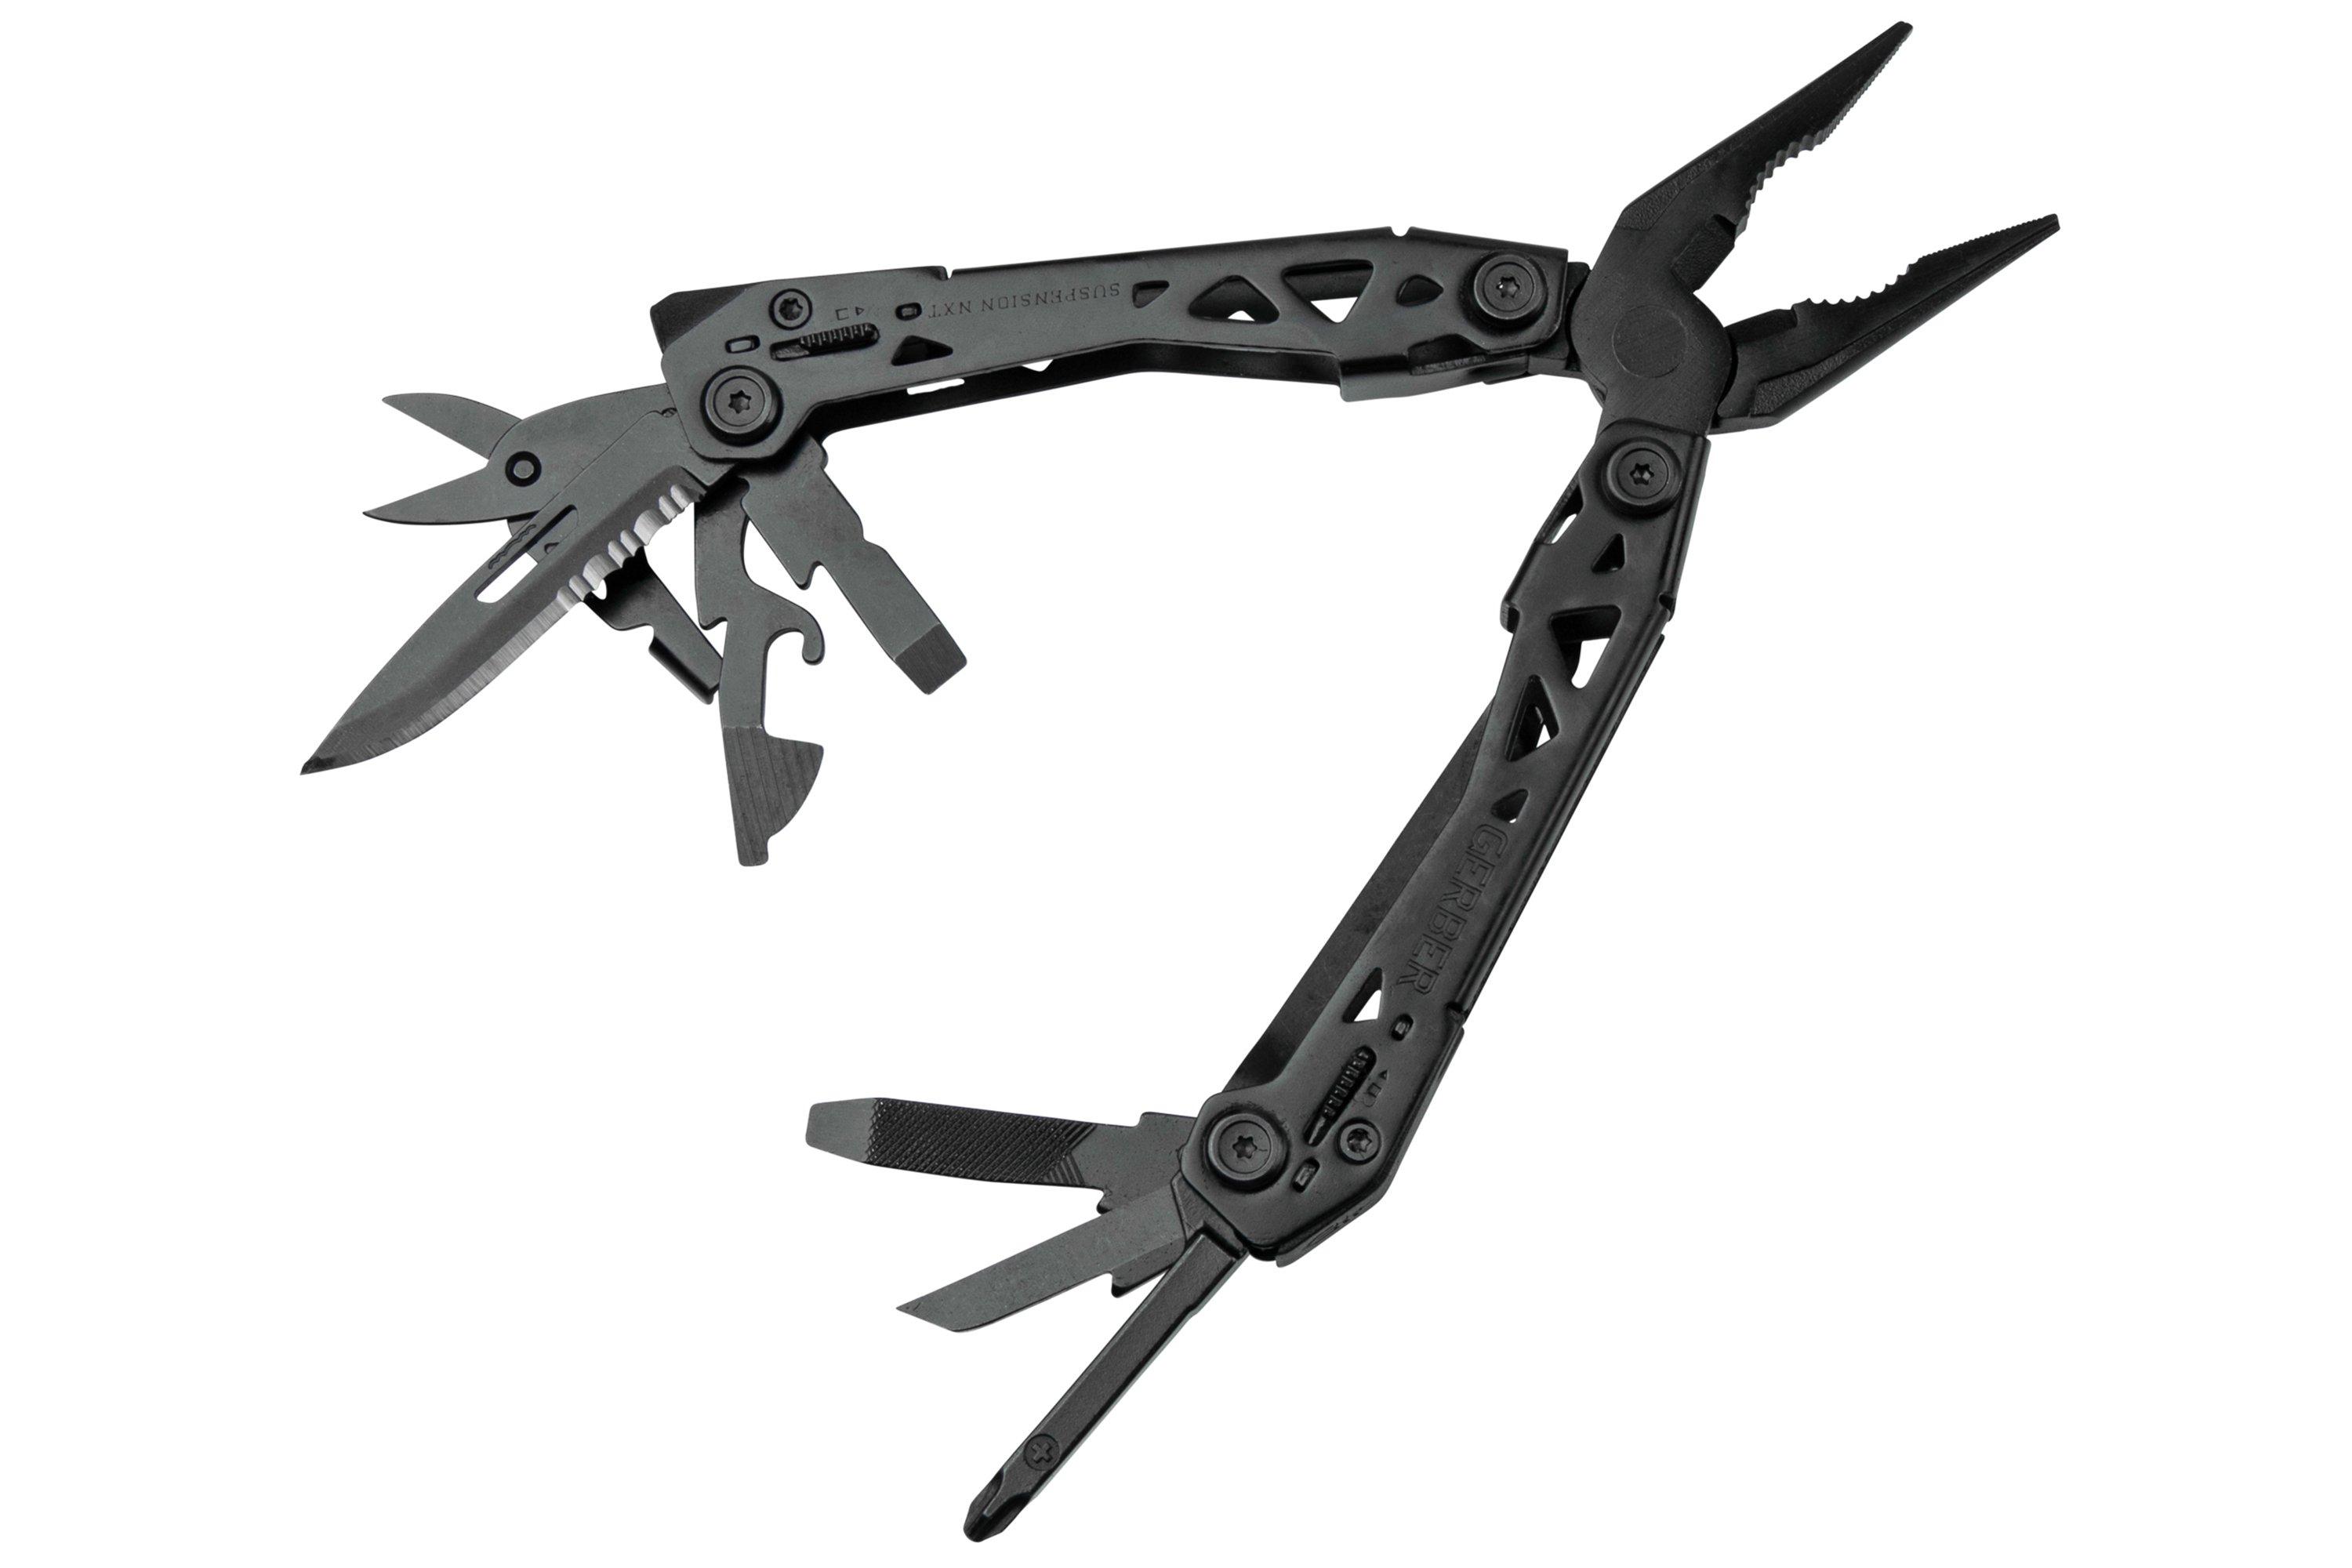 Gerber Suspension NXT 30-001778, black, multi-tool